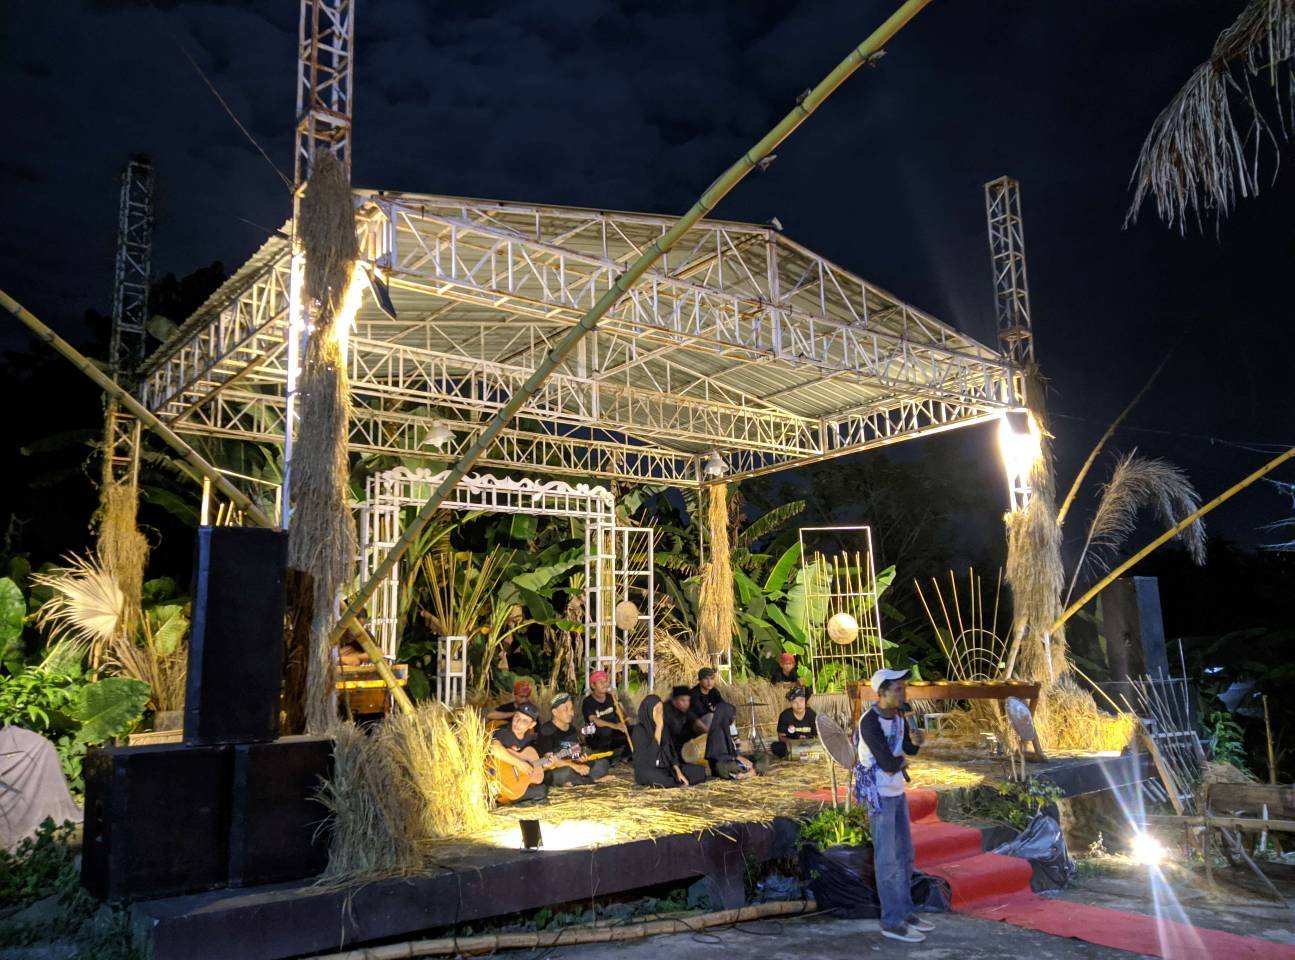 TUTURA.ID - Festival Dade Reme Vula, upaya membangkitkan kembali tradisi perayaan saat bulan purnama